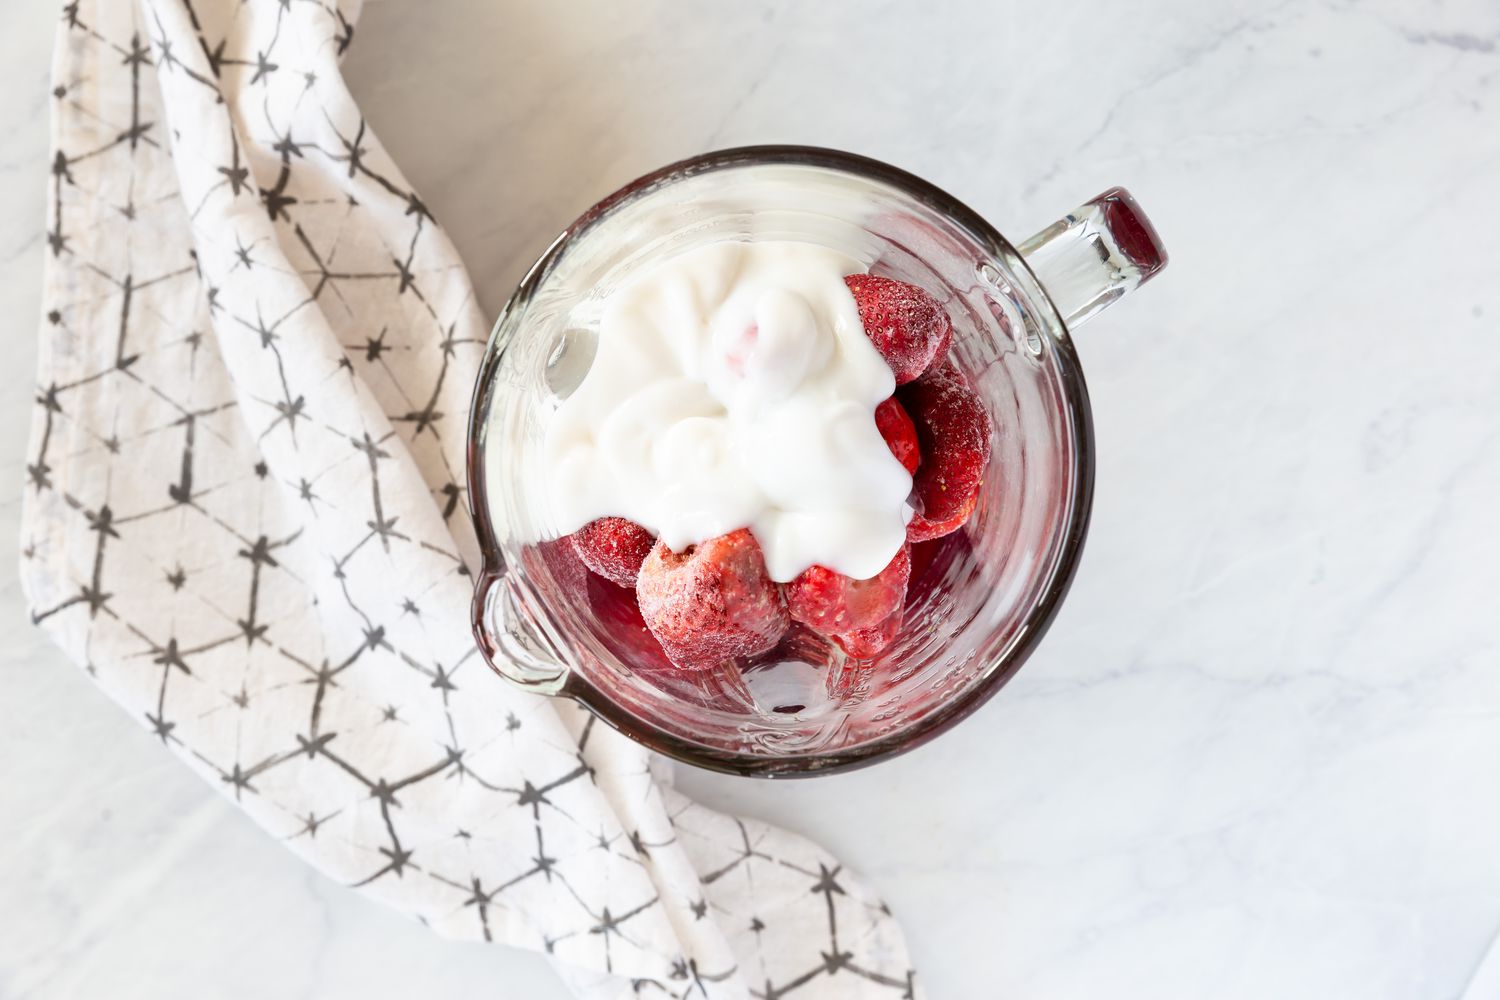 Strawberry smoothie ingredients in a blender